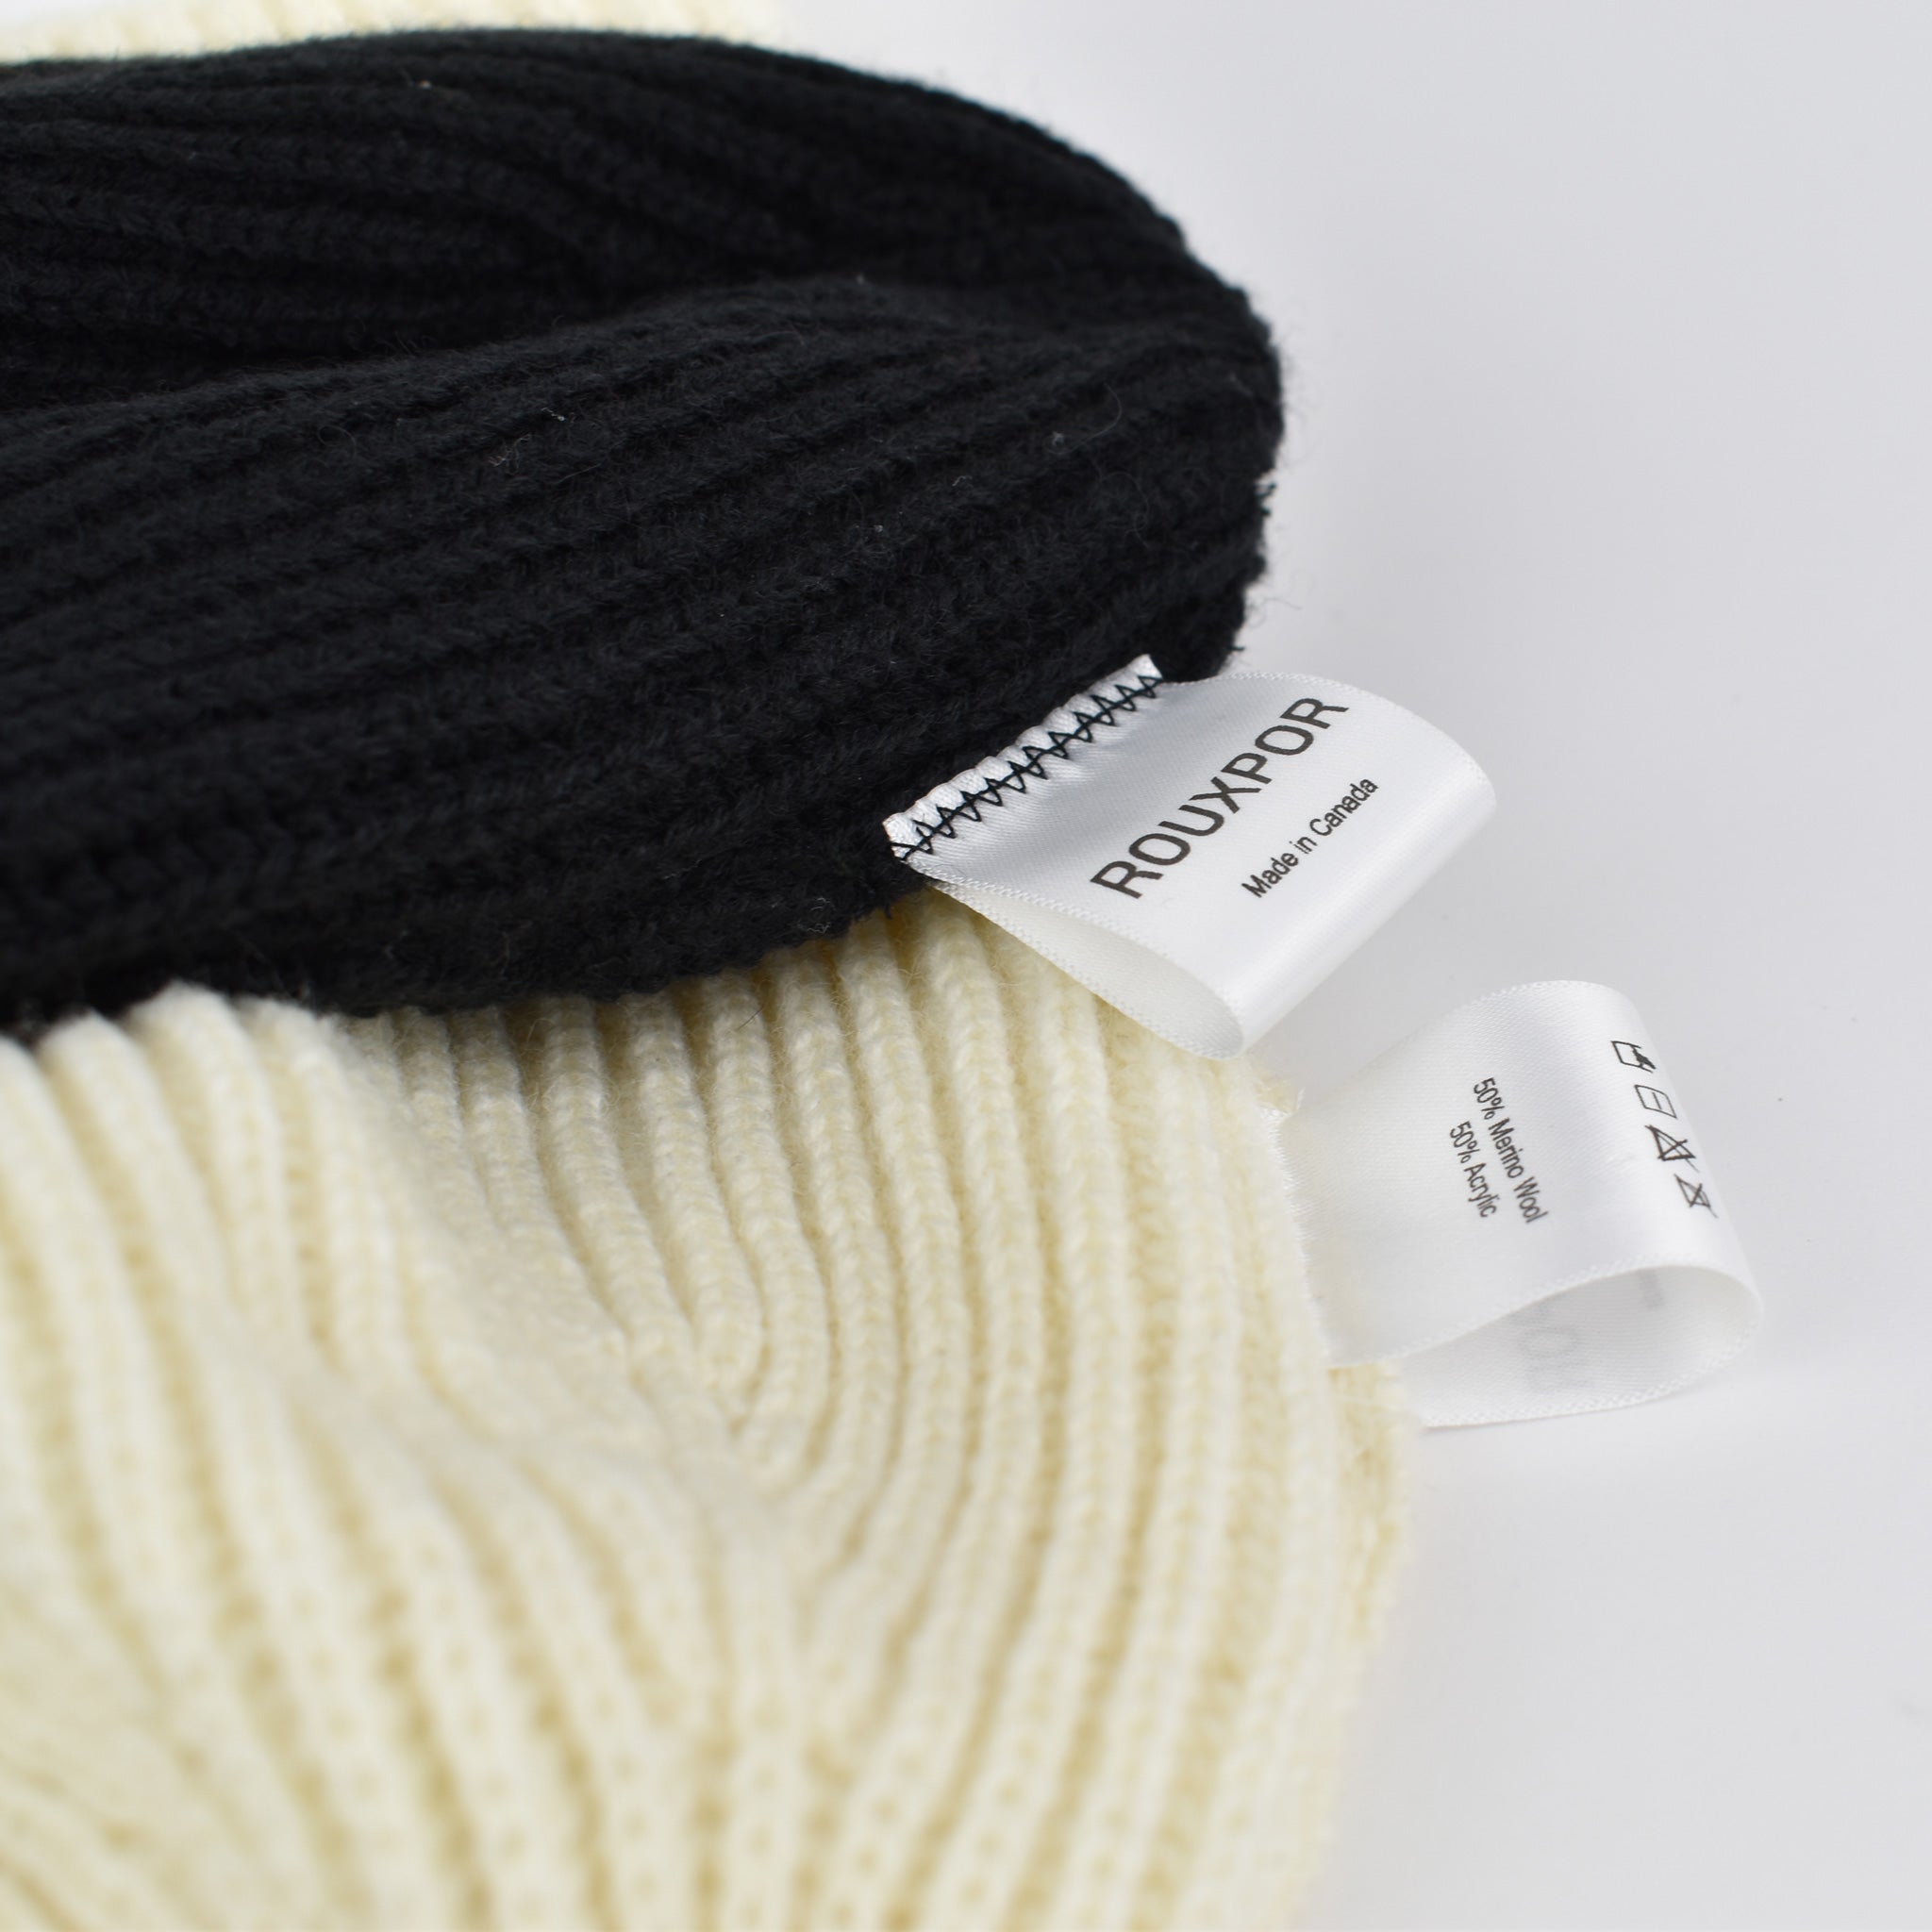 Full Cardigan Knit Beanie w/ Vegan Leather Tag - Black